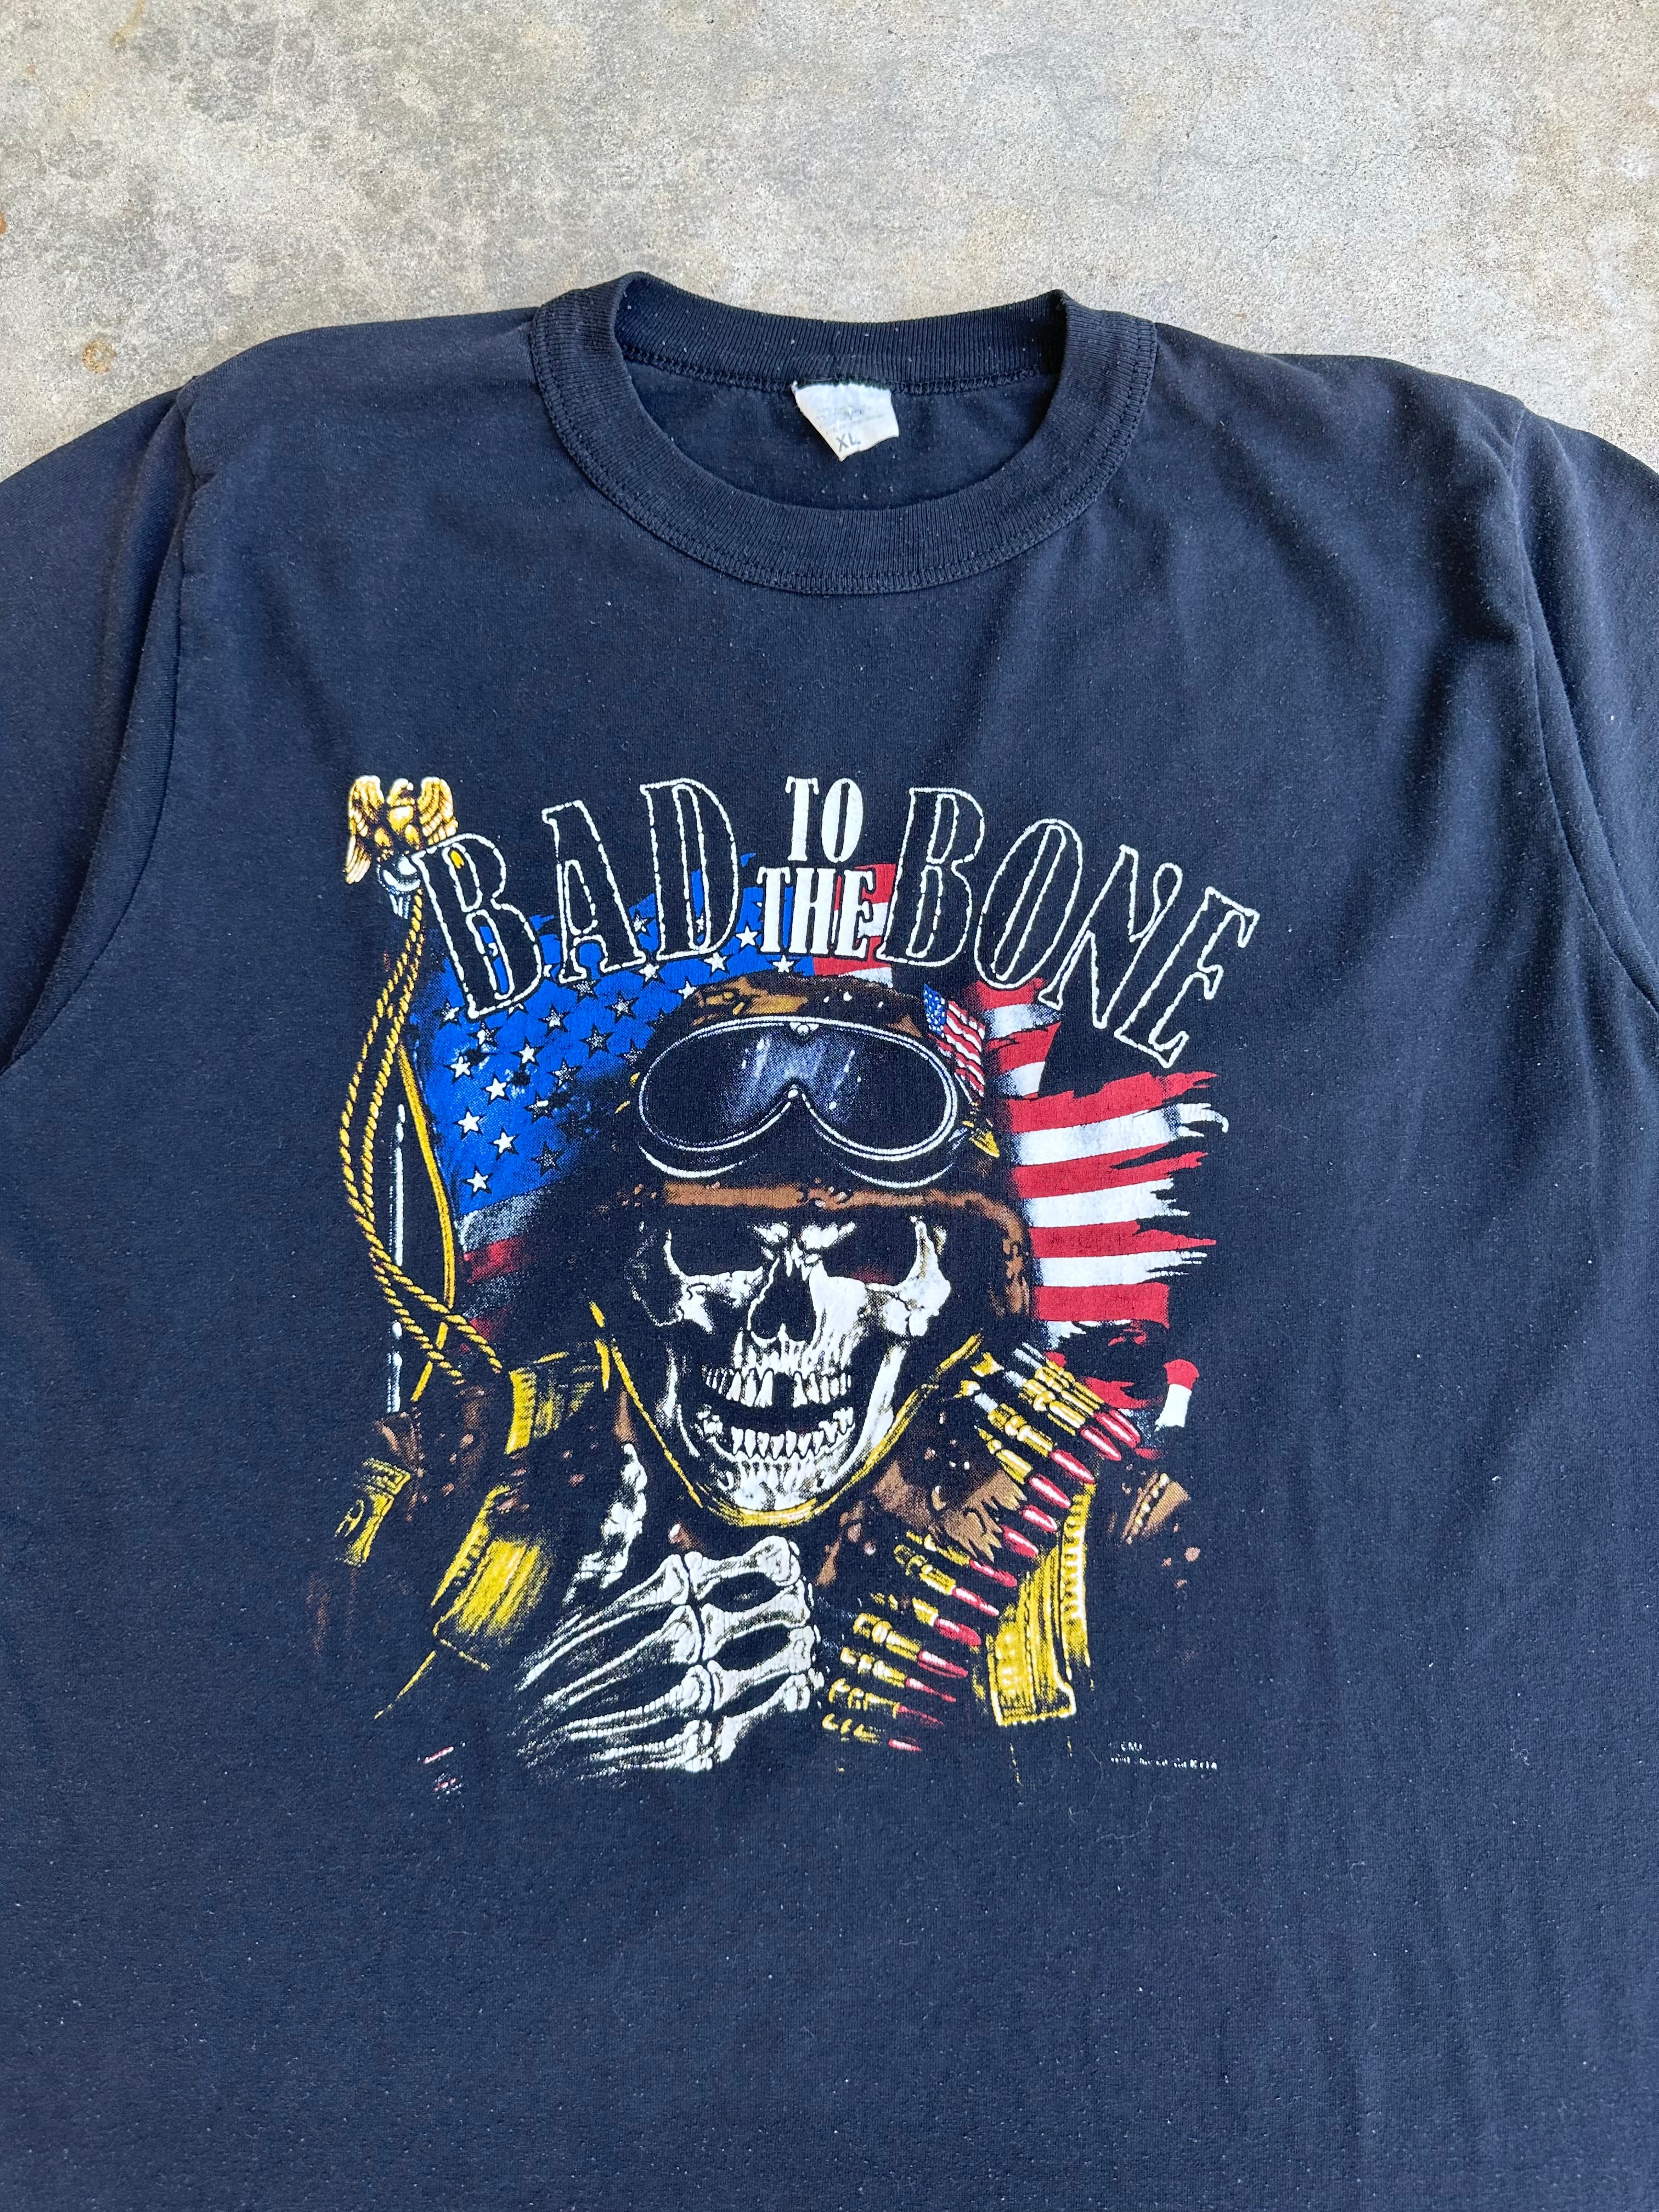 1980s Bad to the Bone T-Shirt (L/XL)